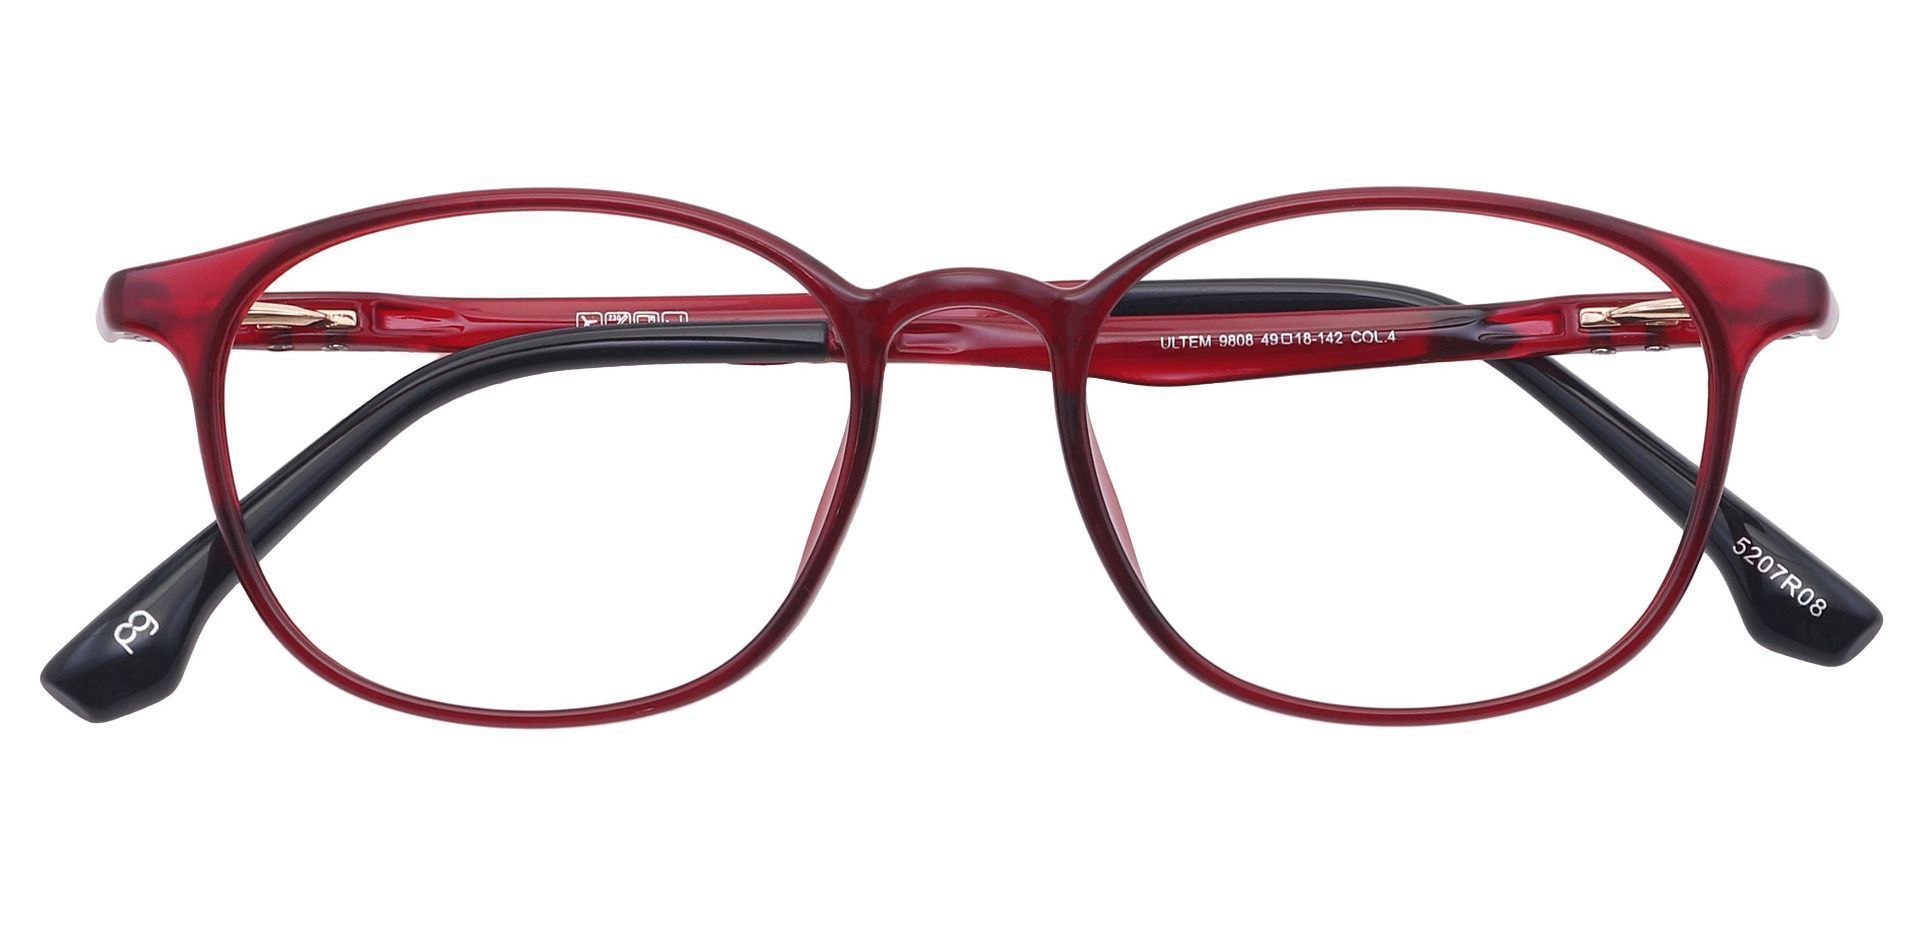 Shannon Oval Eyeglasses Frame - Red